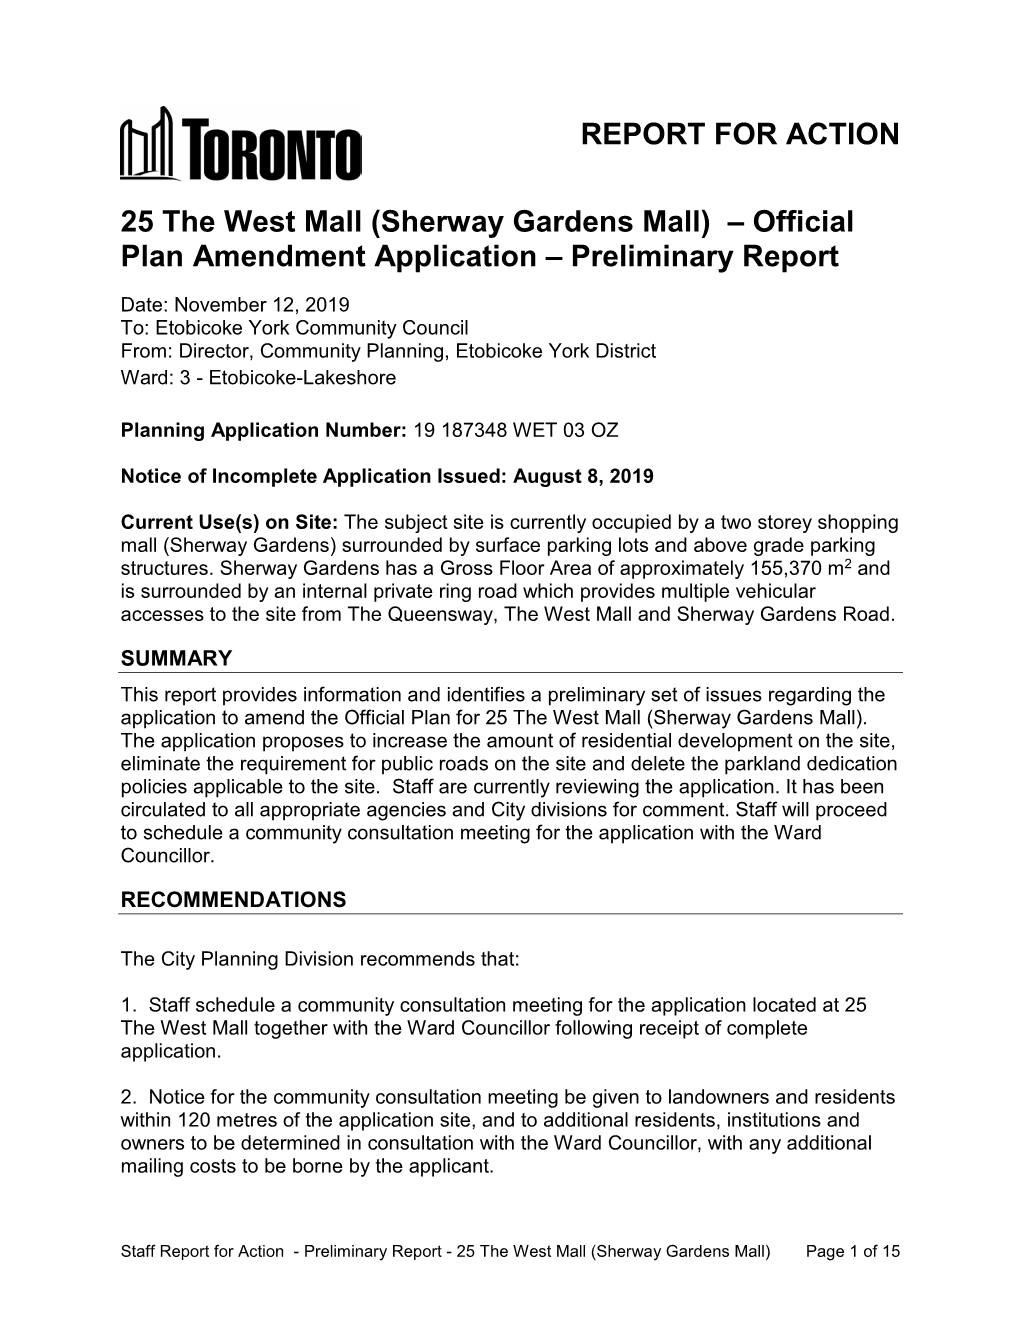 Sherway Gardens Mall) – Official Plan Amendment Application – Preliminary Report